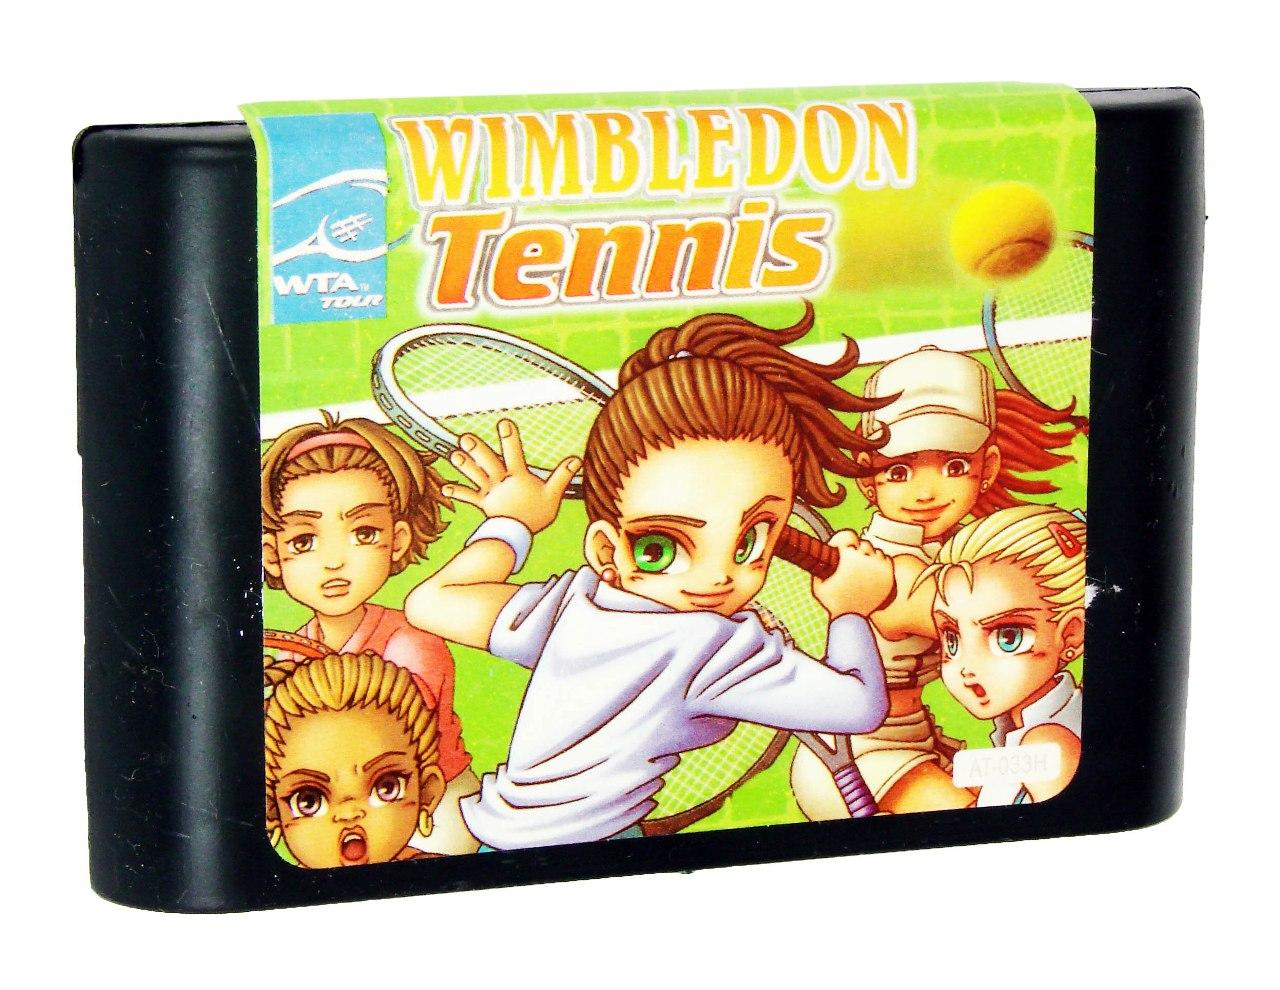   Sega Wimbledon Tennis (Sega)